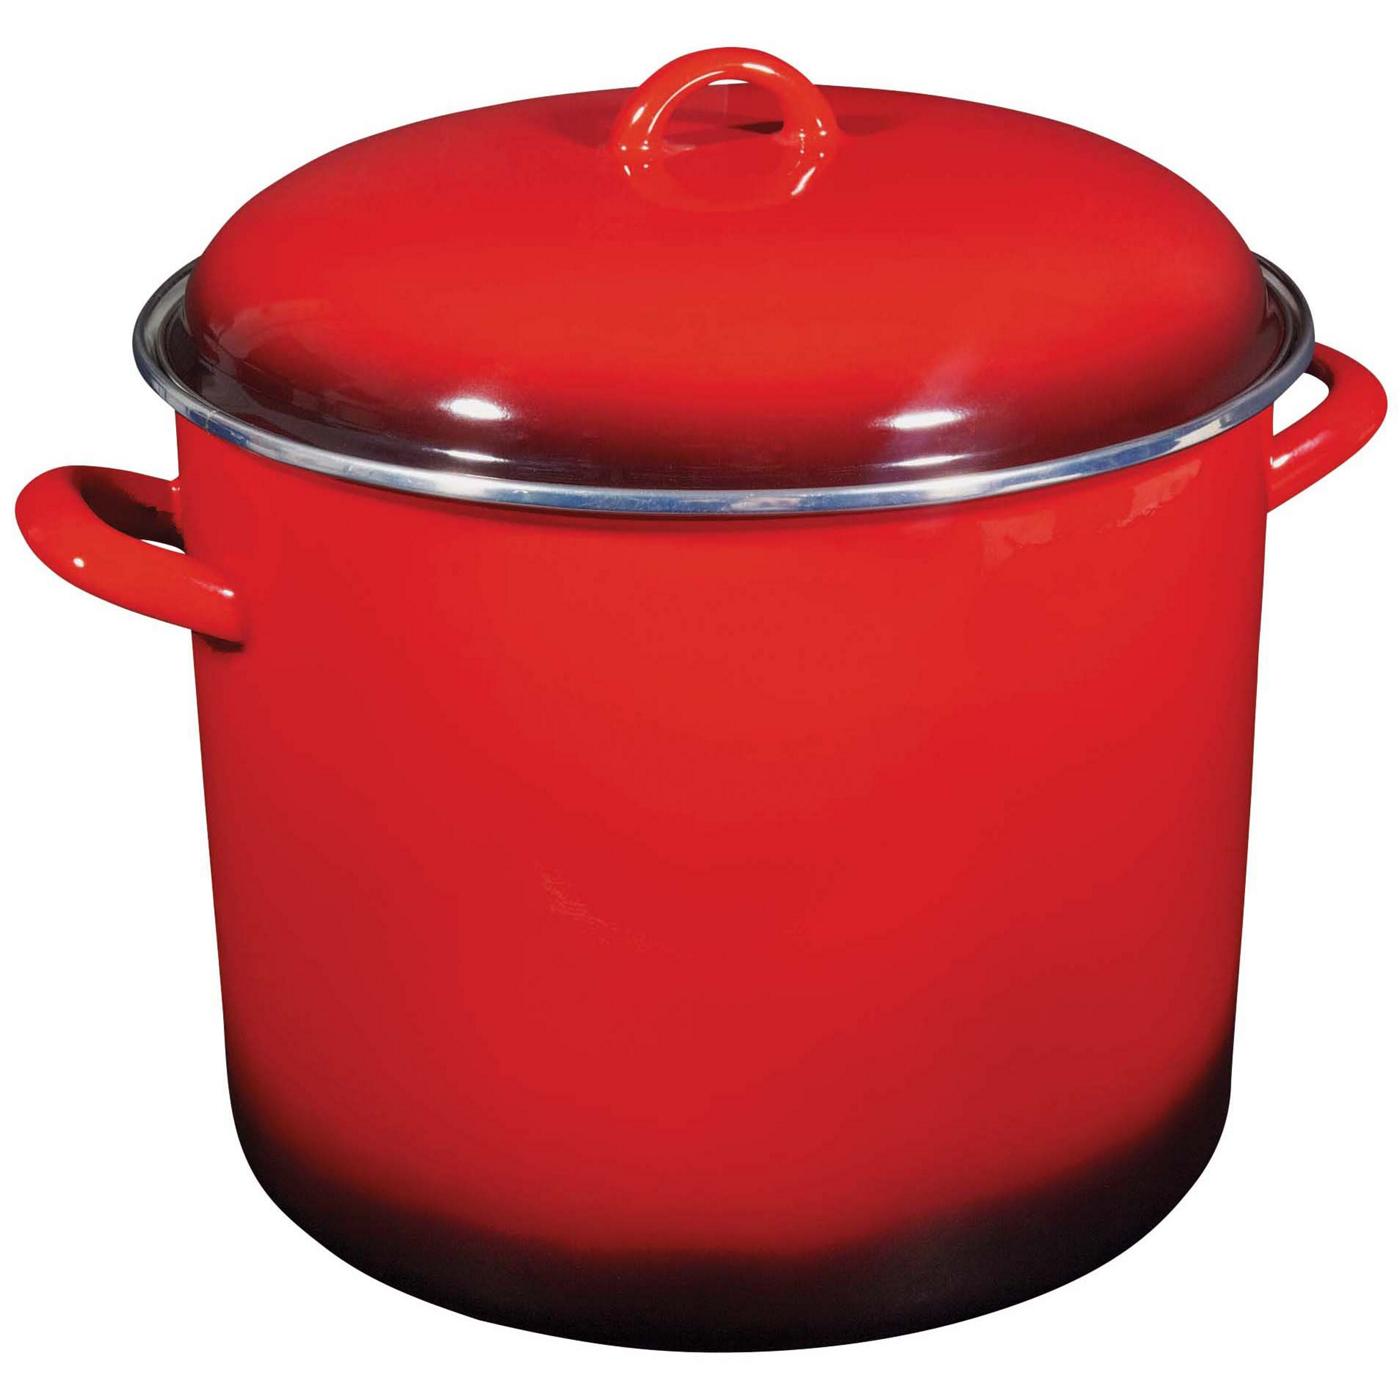 Cocinaware Red Enamel Stock Pot; image 1 of 2